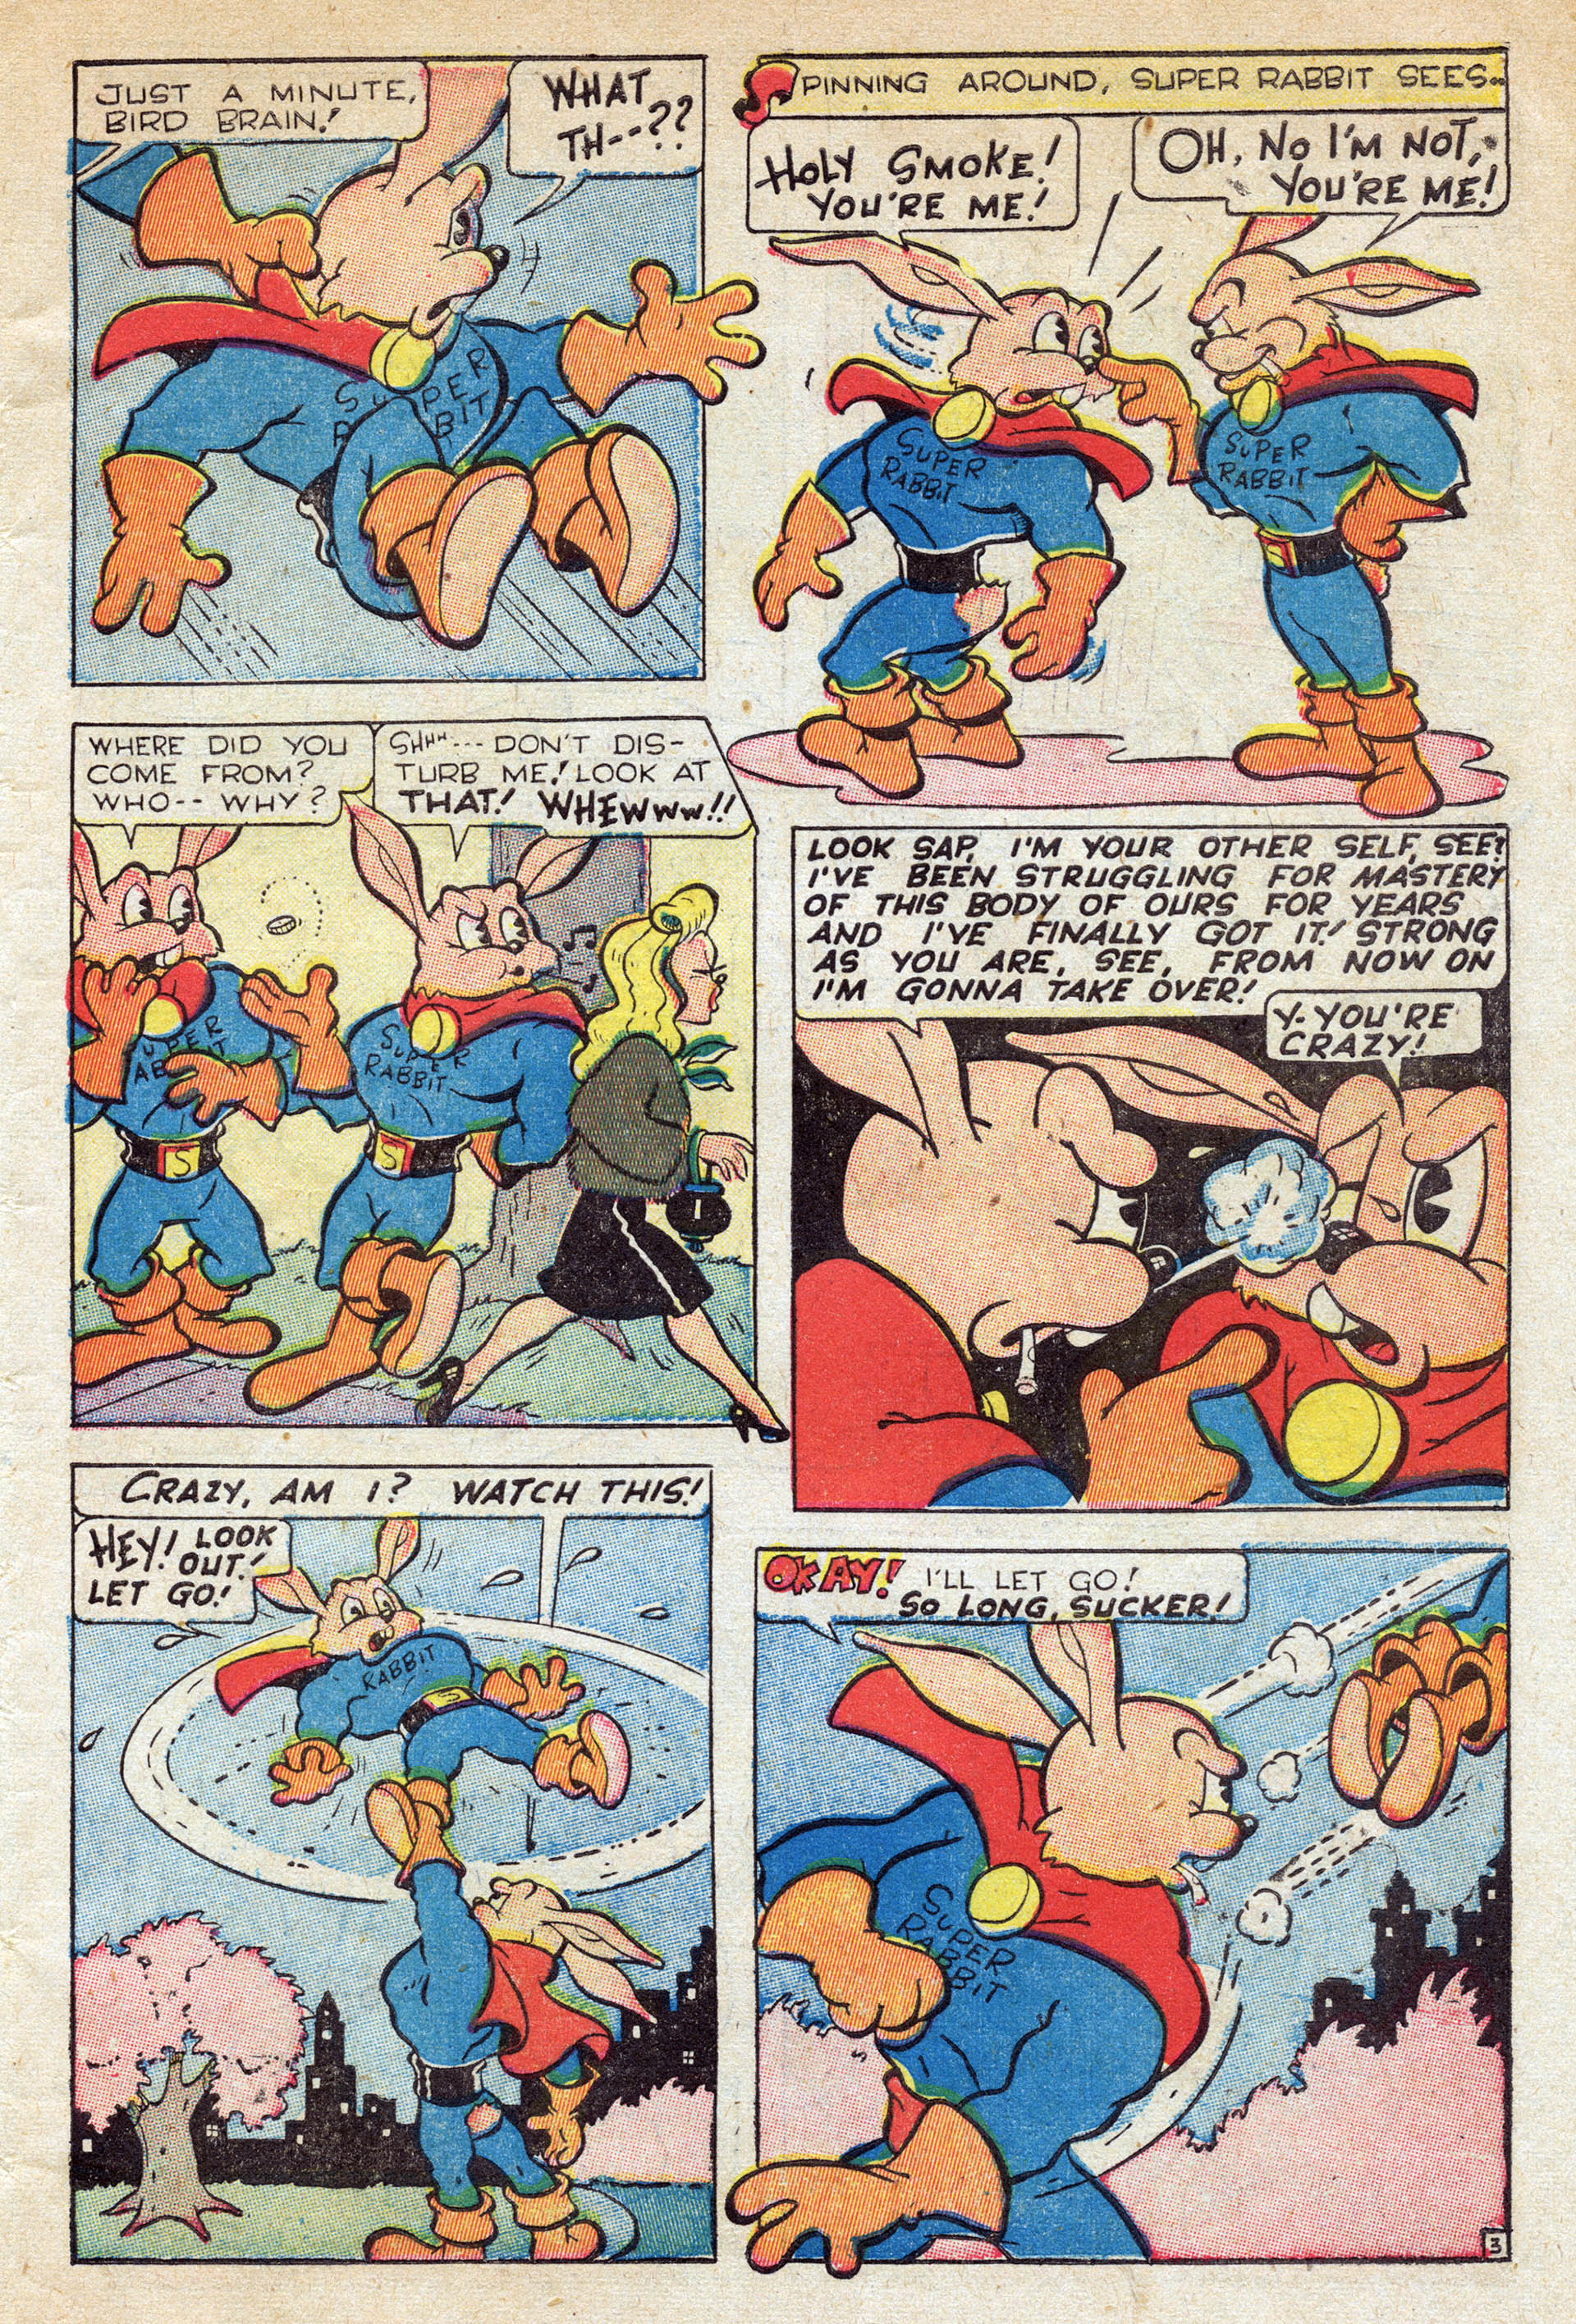 Read online Super Rabbit comic -  Issue #7 - 5